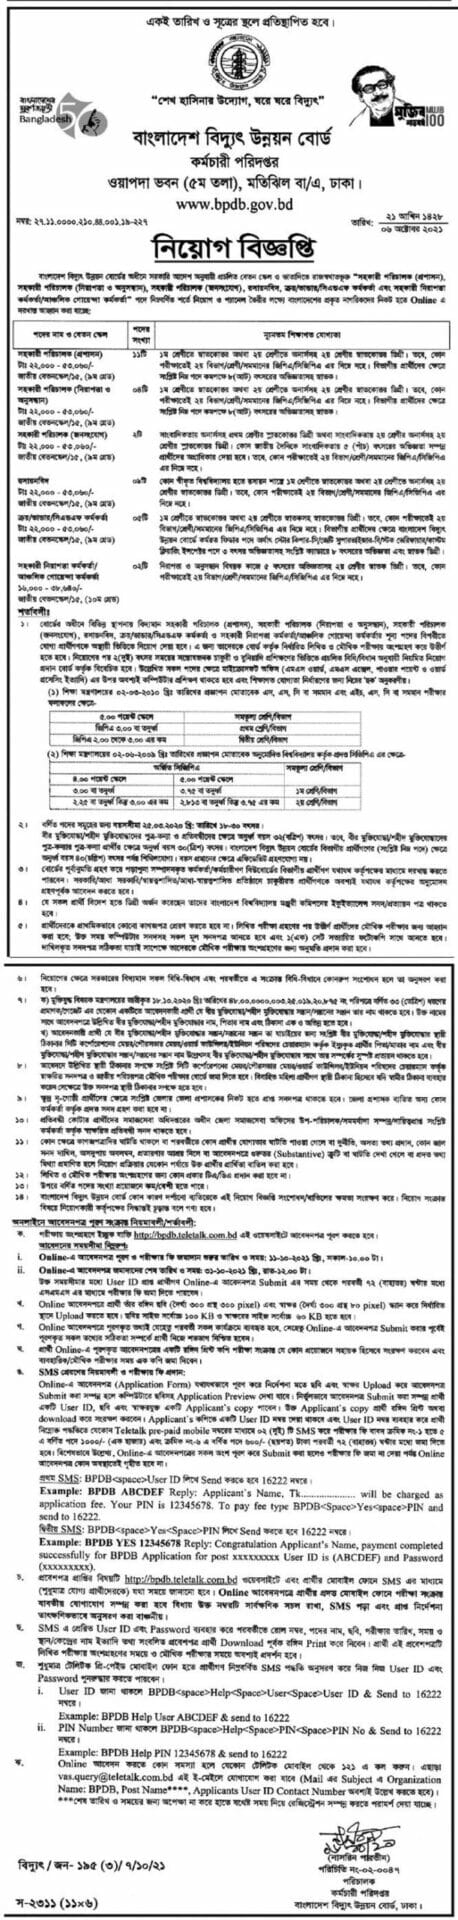 Bangladesh Electrification Development Board Job Circular